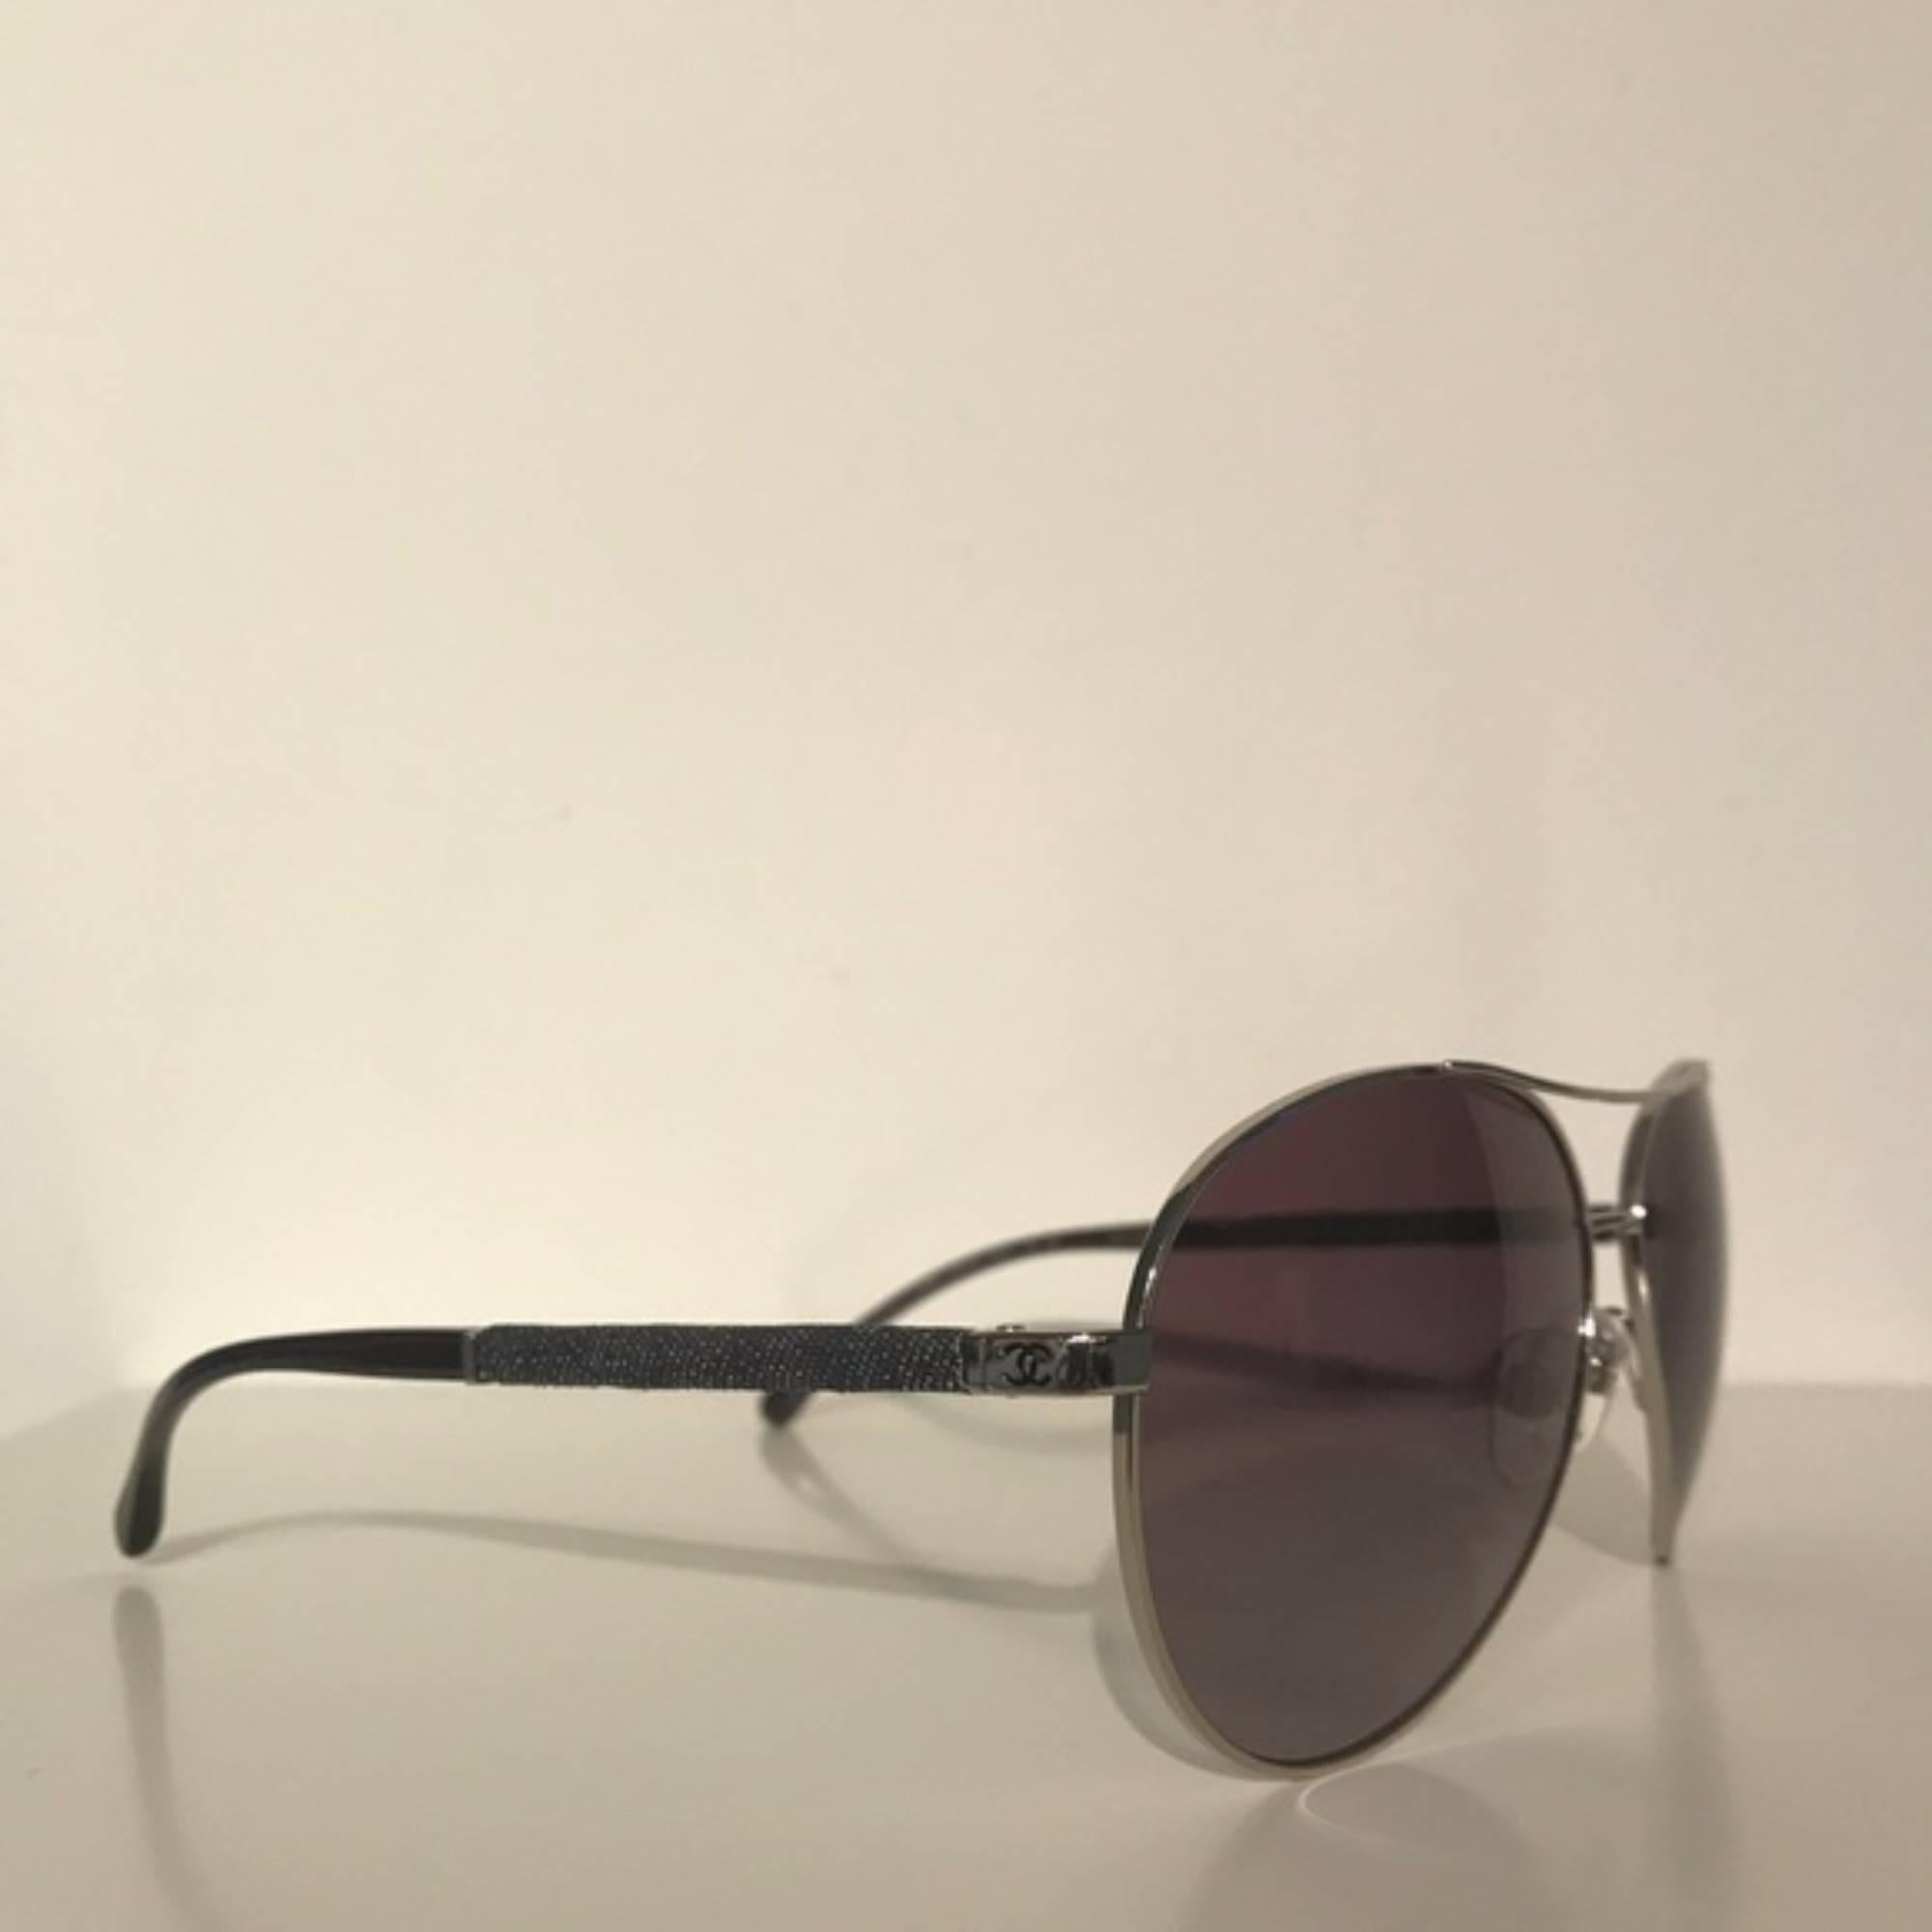 Chanel Aviator Sunglasses (Silver, Size - OS)
Brand new. 